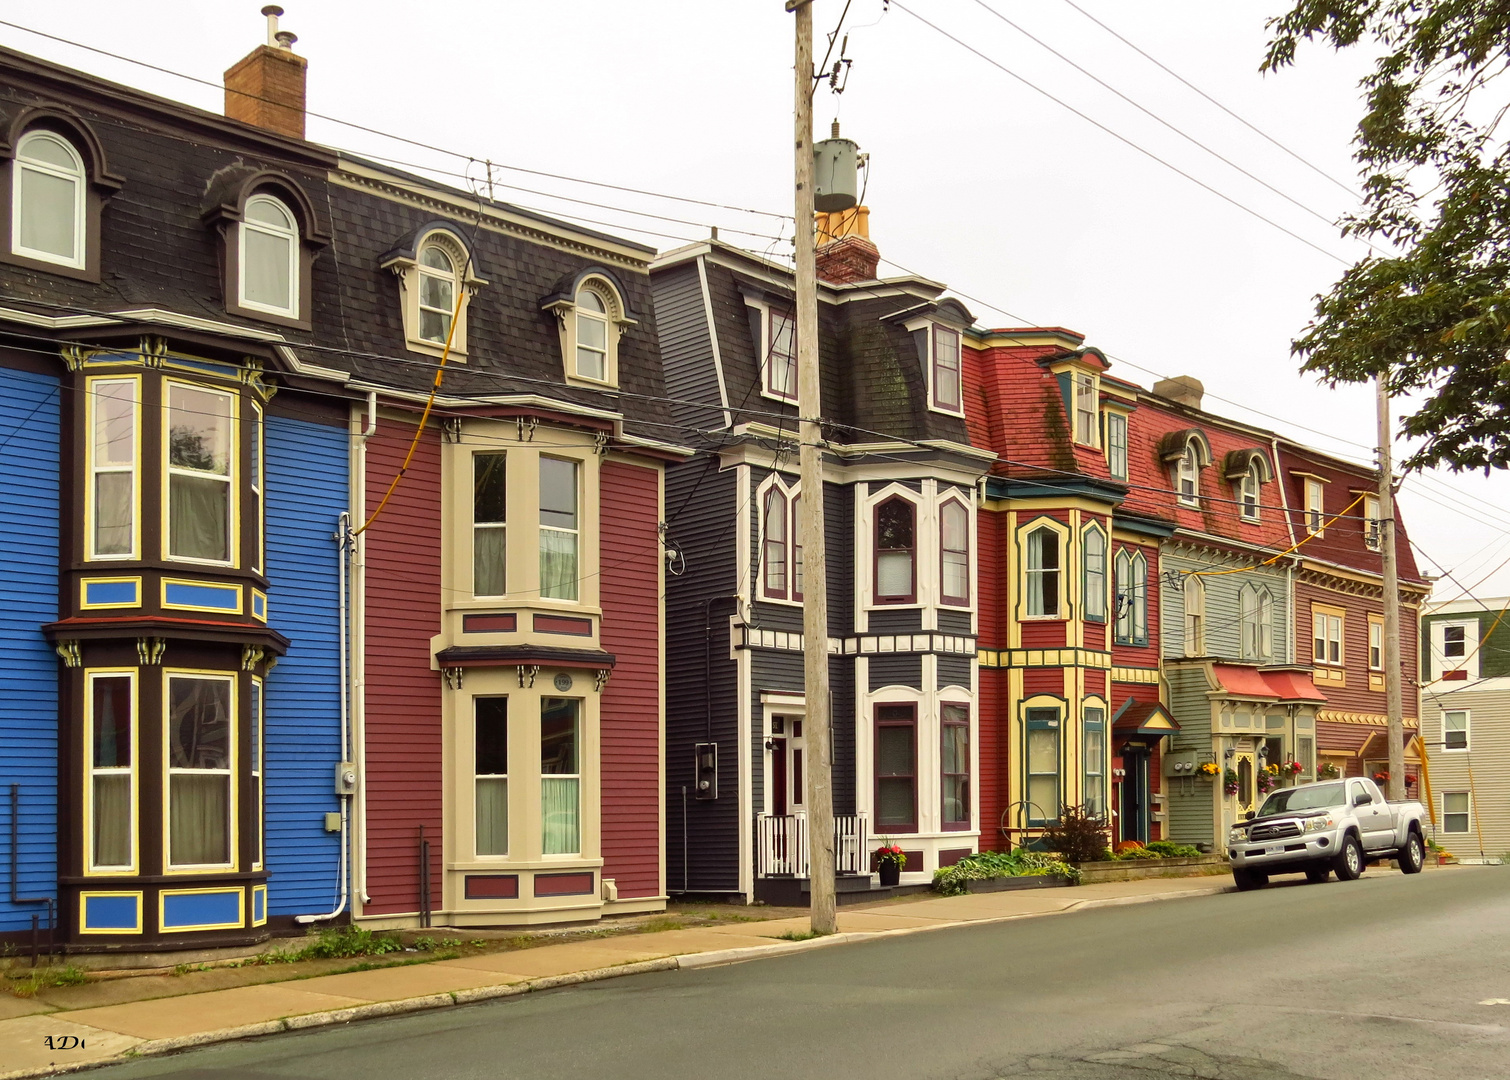 The Colourful St. John's Houses